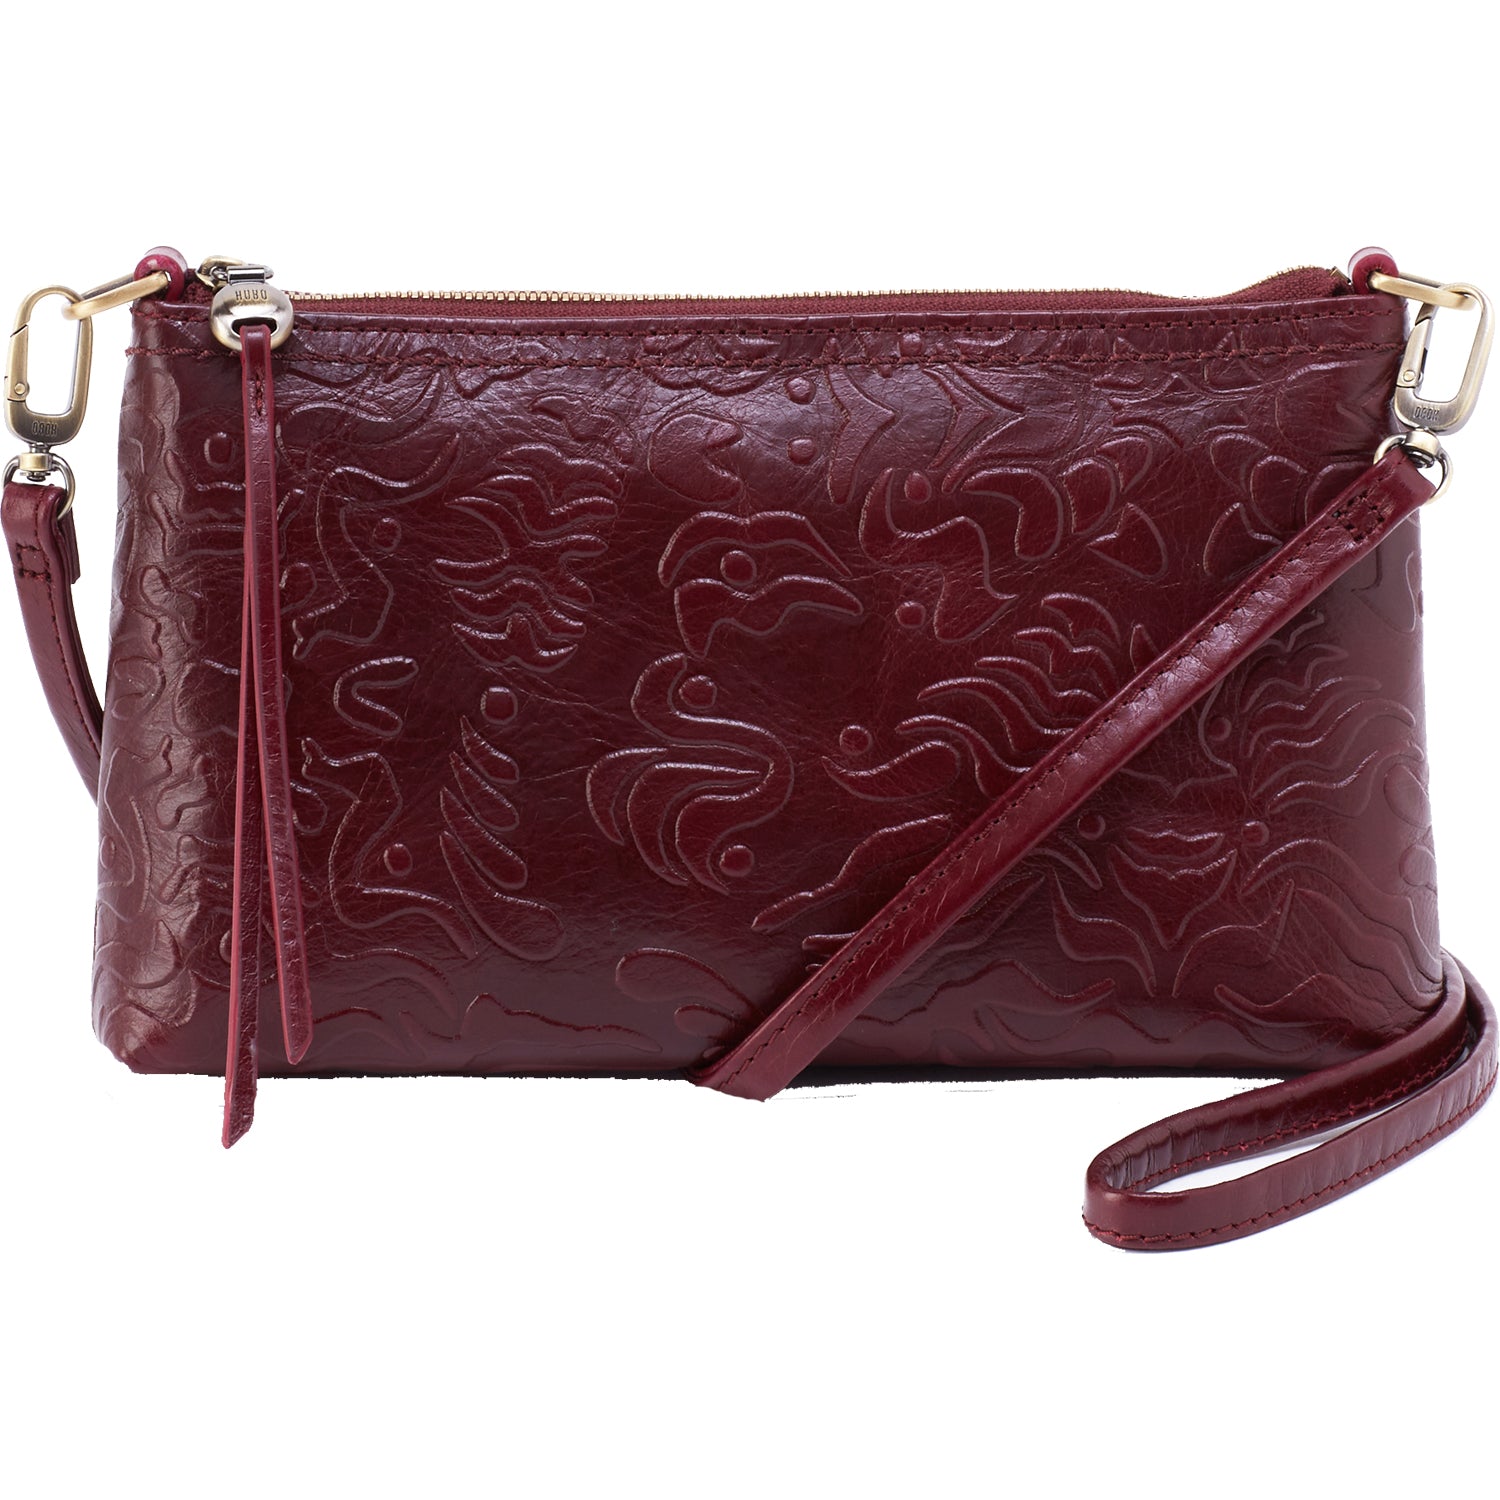 Nwt Brand New Hobo Vivian Small Crossbody Merlot Women Bag Retired Design Pattern Rare Find (leather)